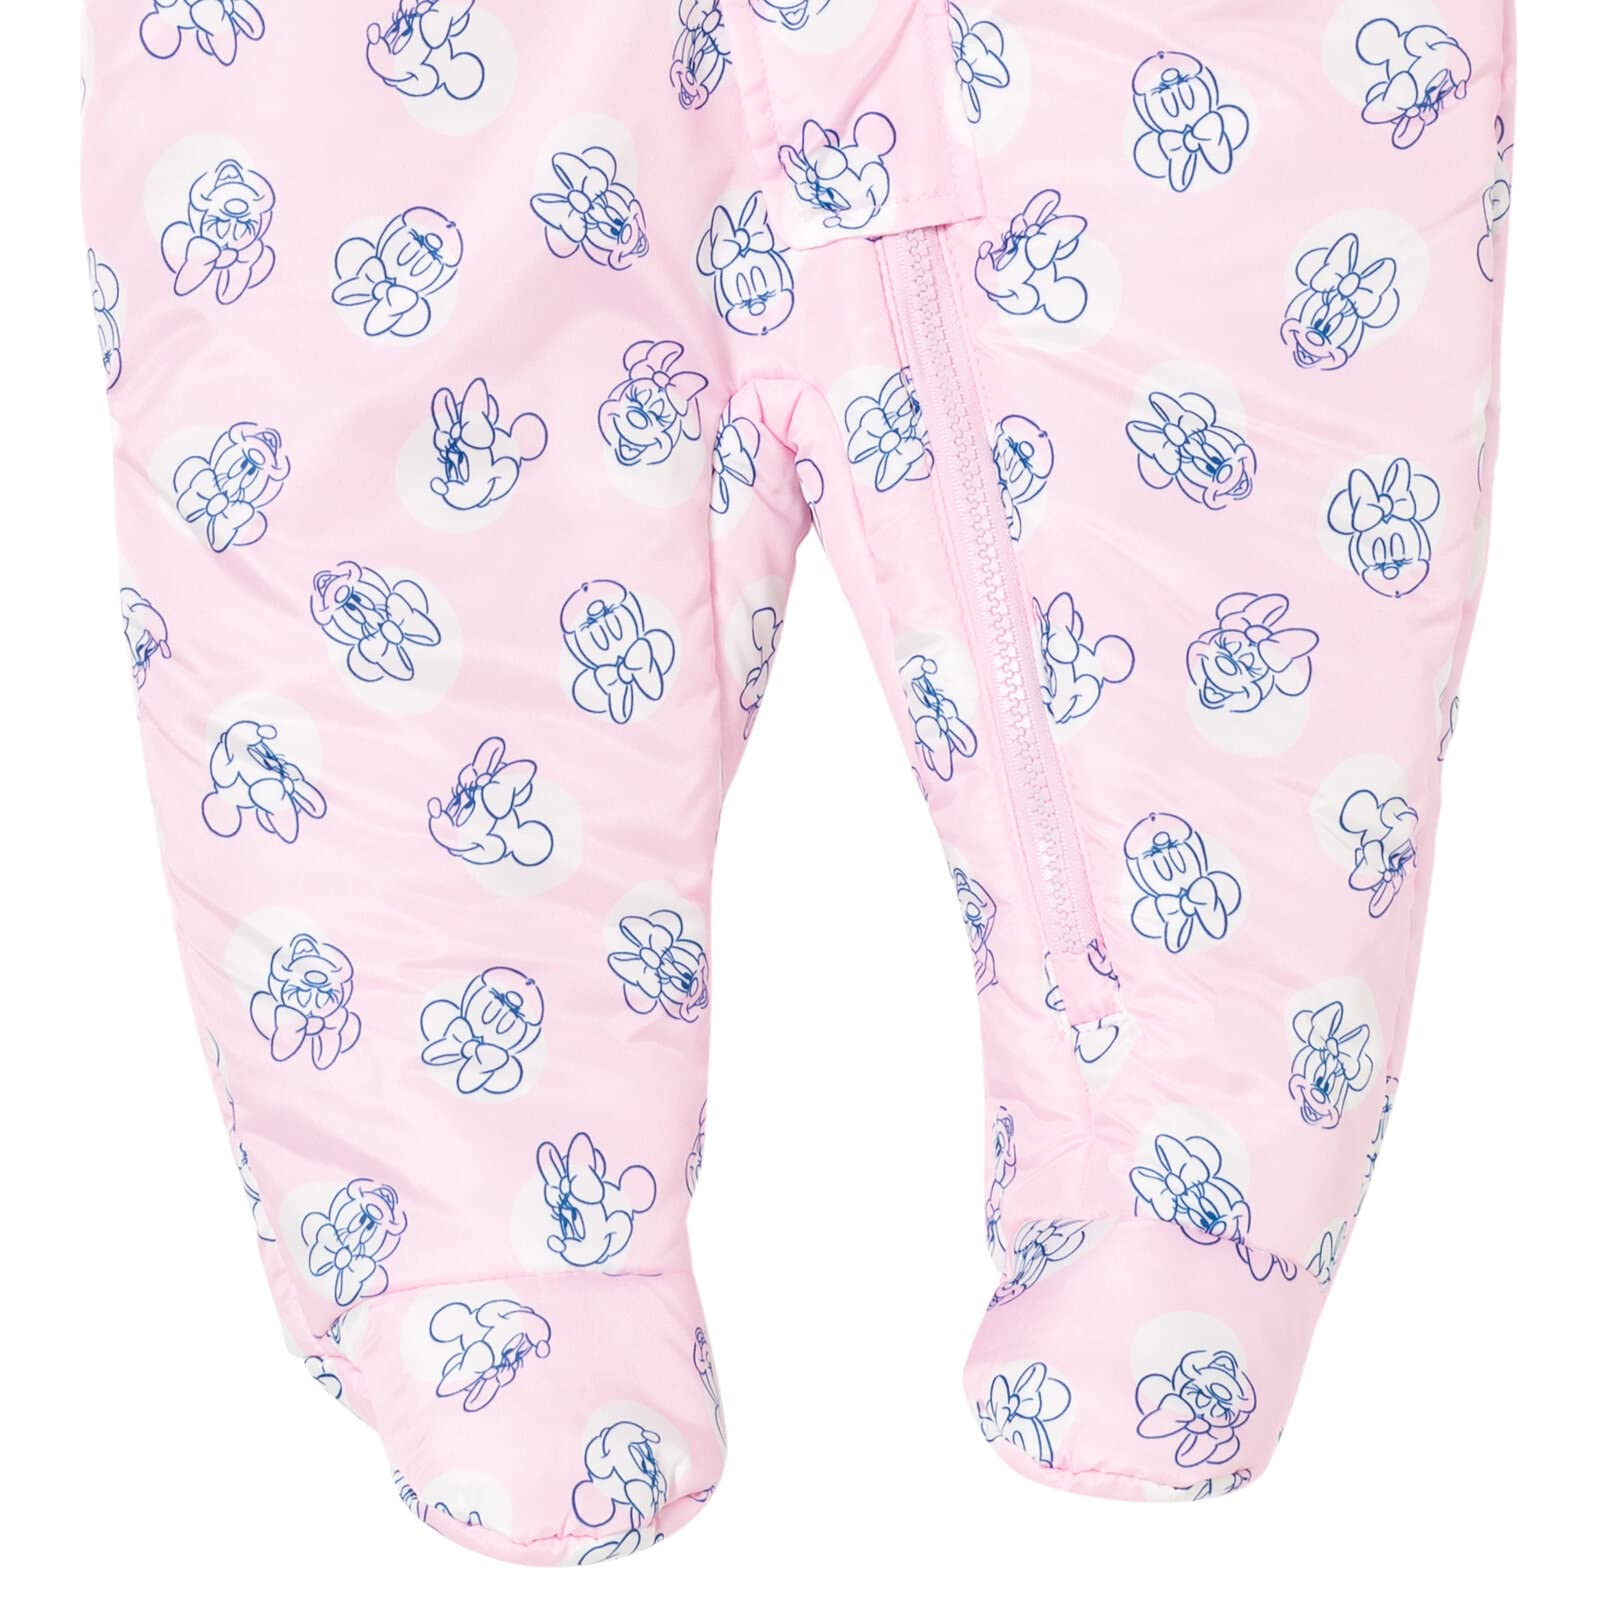 Disney Minnie Mouse Baby Girls Outerwear Pram Suit Newborn to Infant